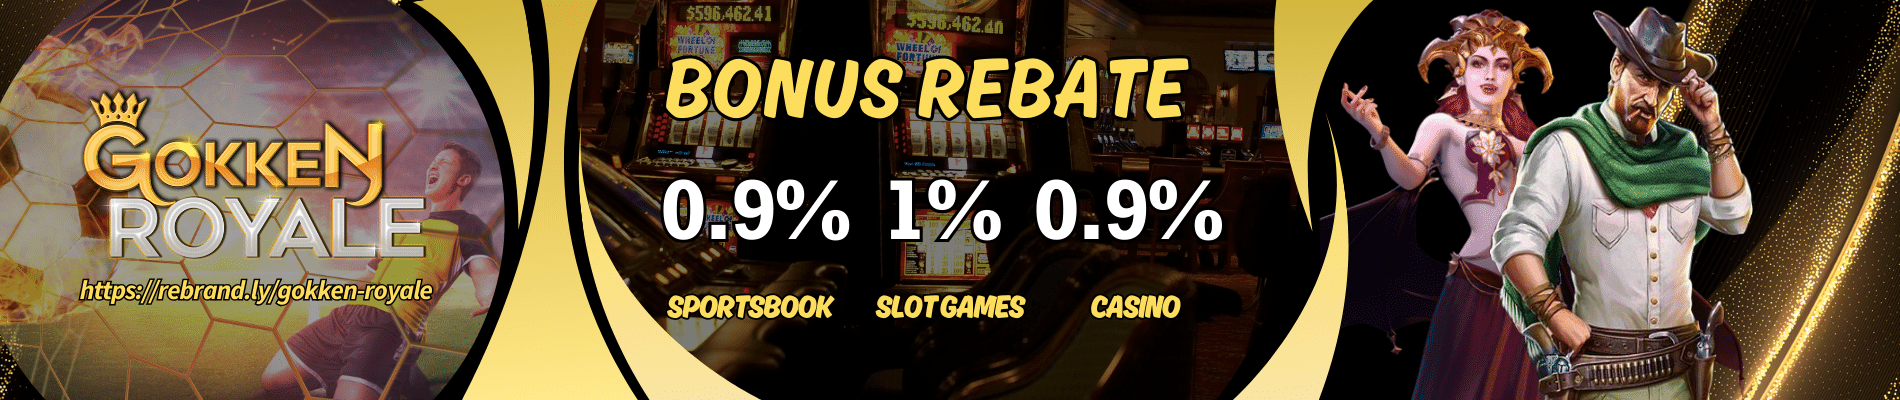 Bonus Rebate | Slots Online, Live Casino & Sportsbook